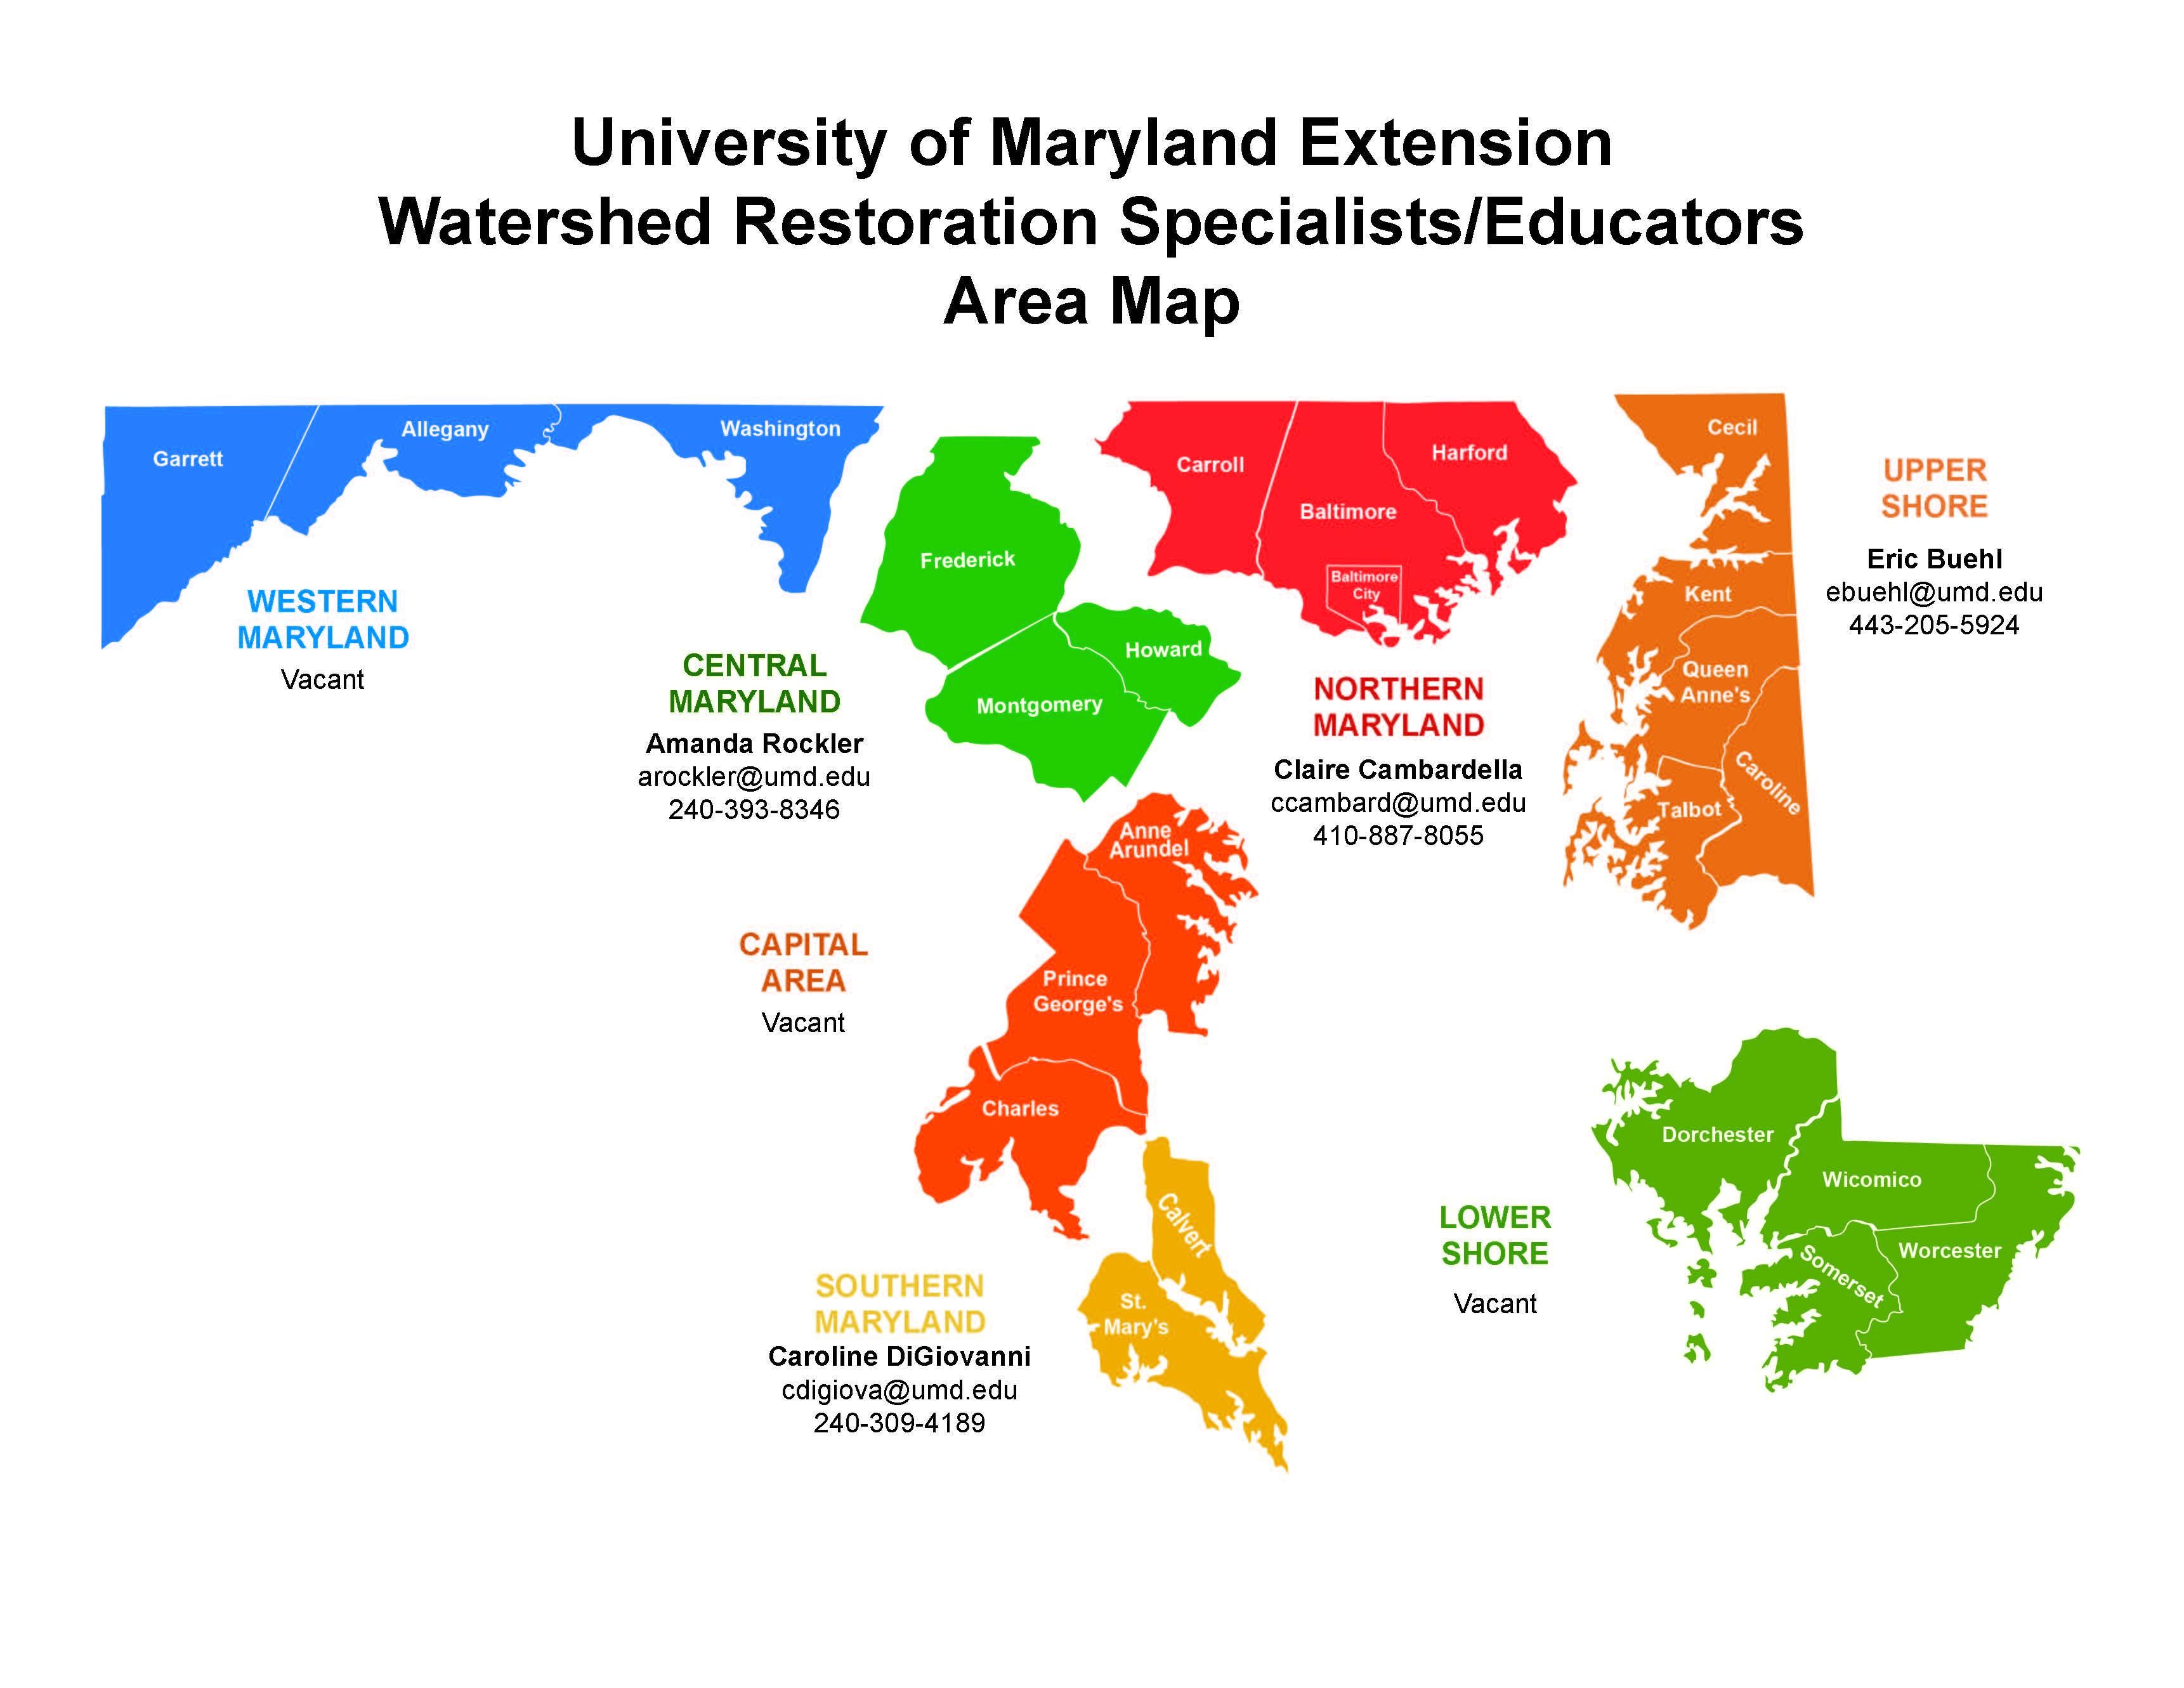 WPRP Area Map